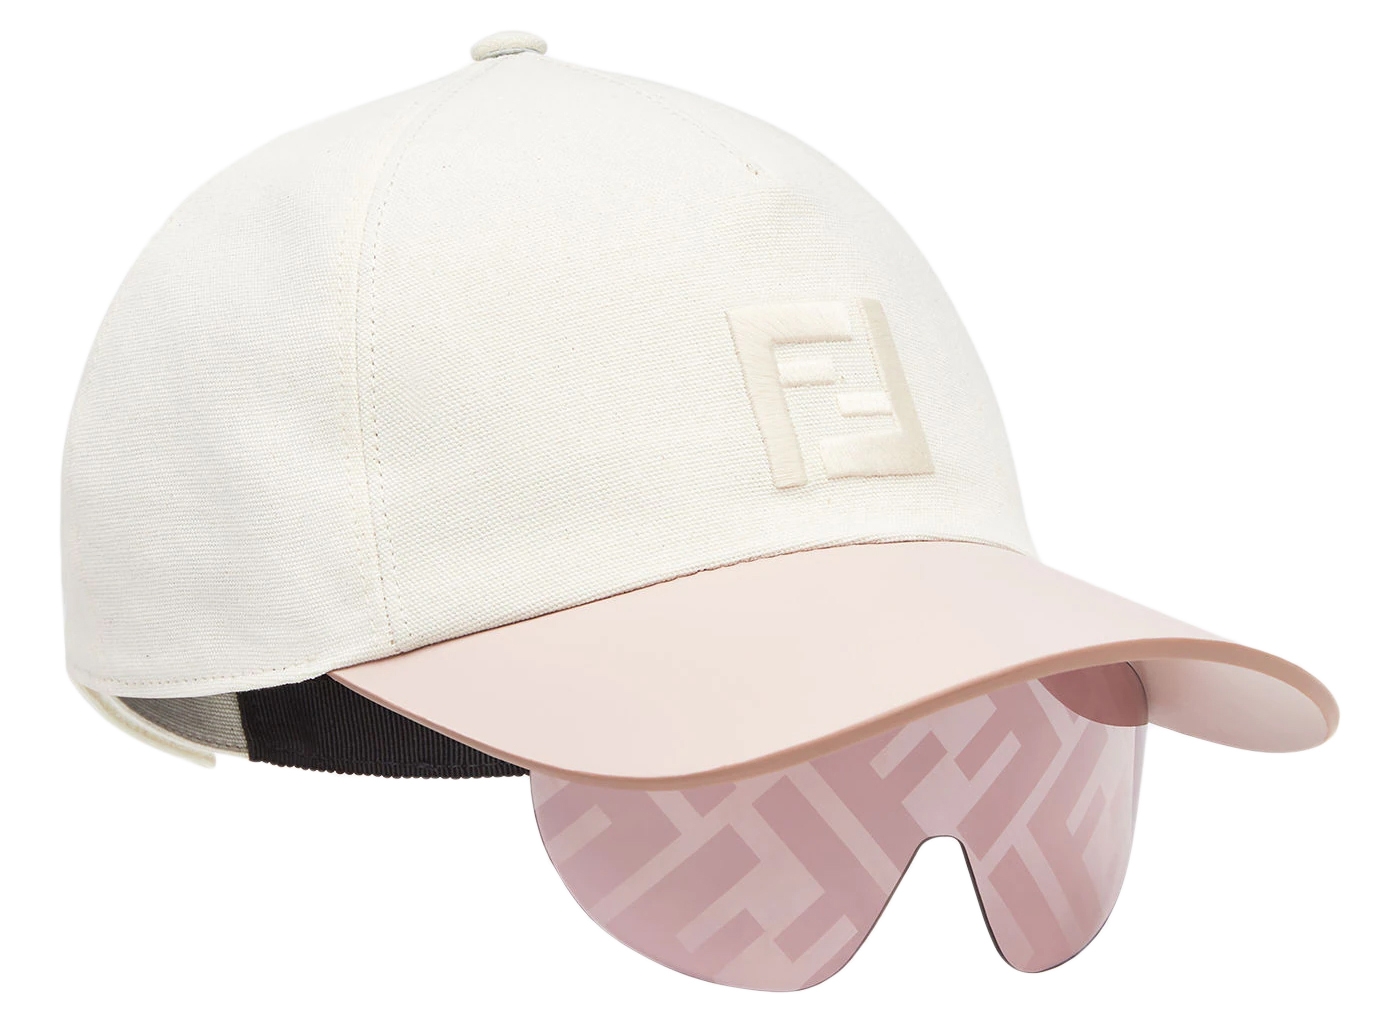 Black EyeCap D-frame sunglasses hat, Fendi